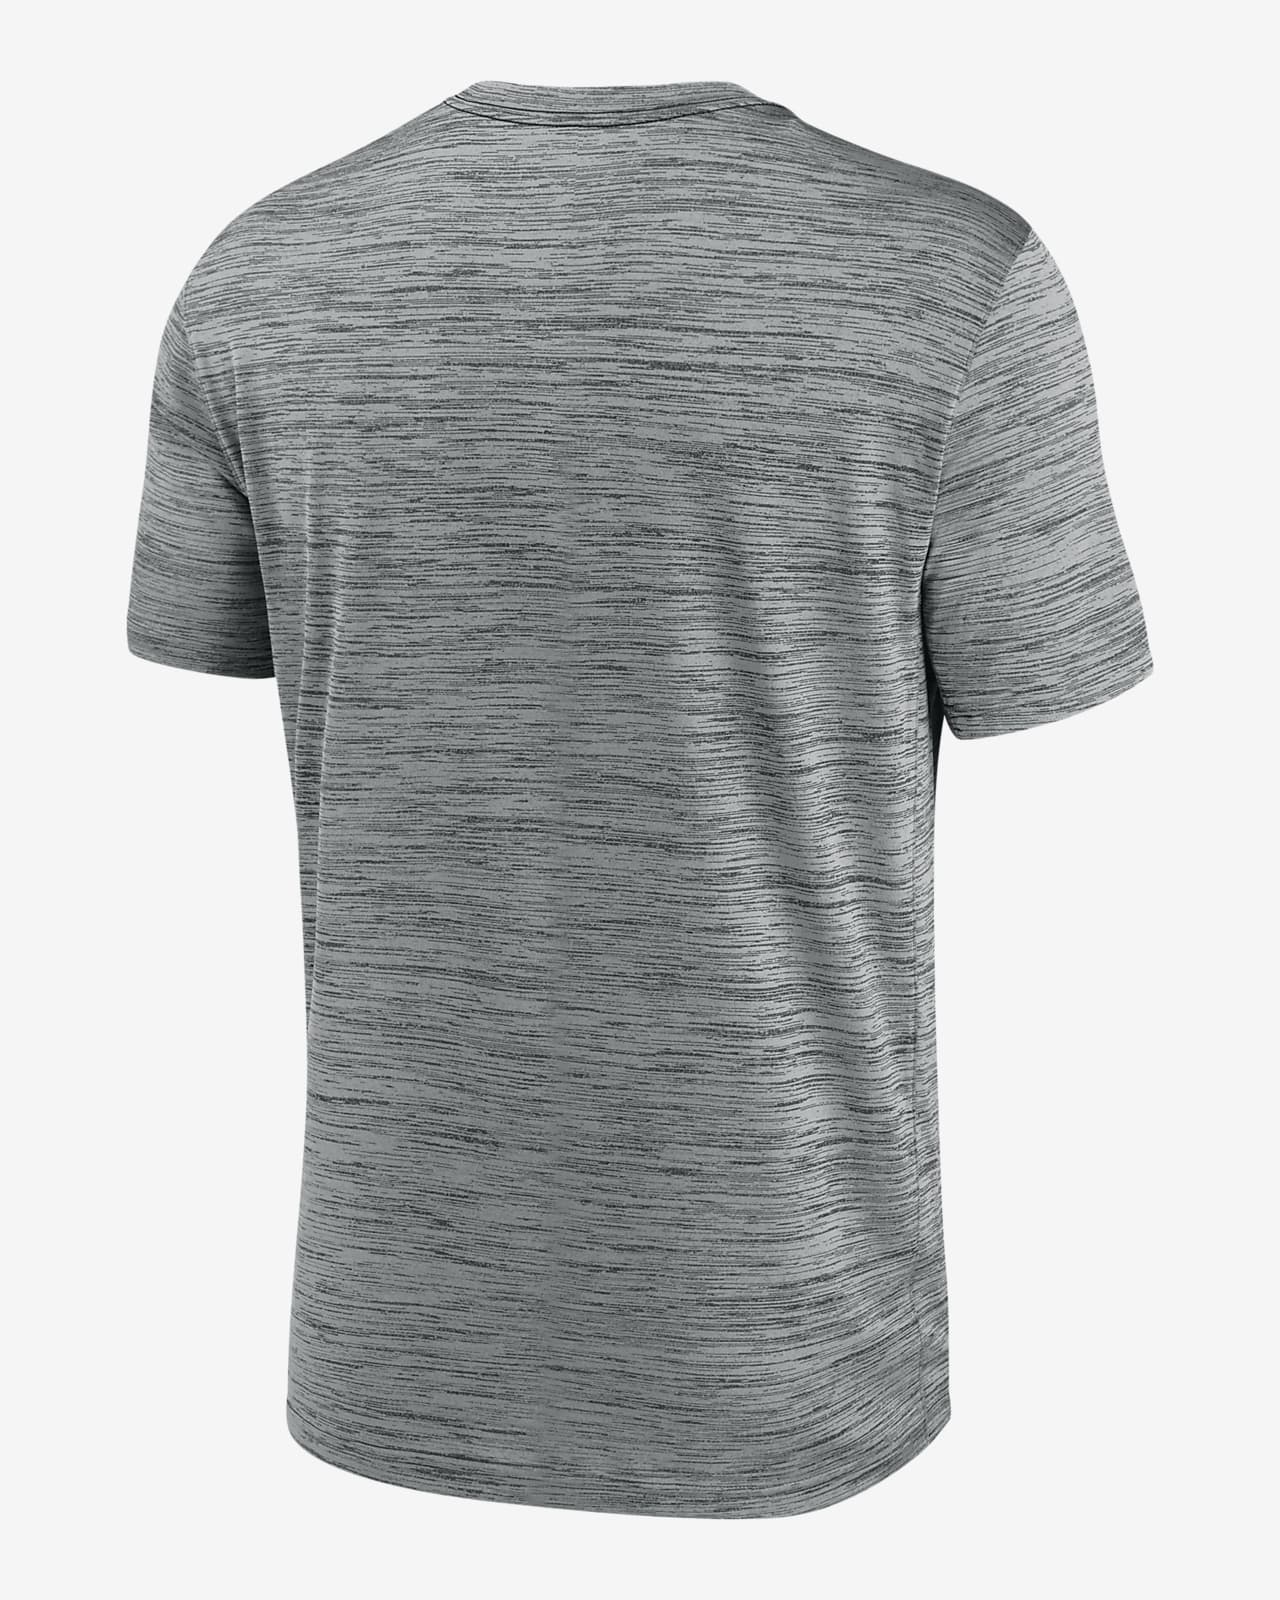 Nike Yard Line (NFL Philadelphia Eagles) Men's T-Shirt.